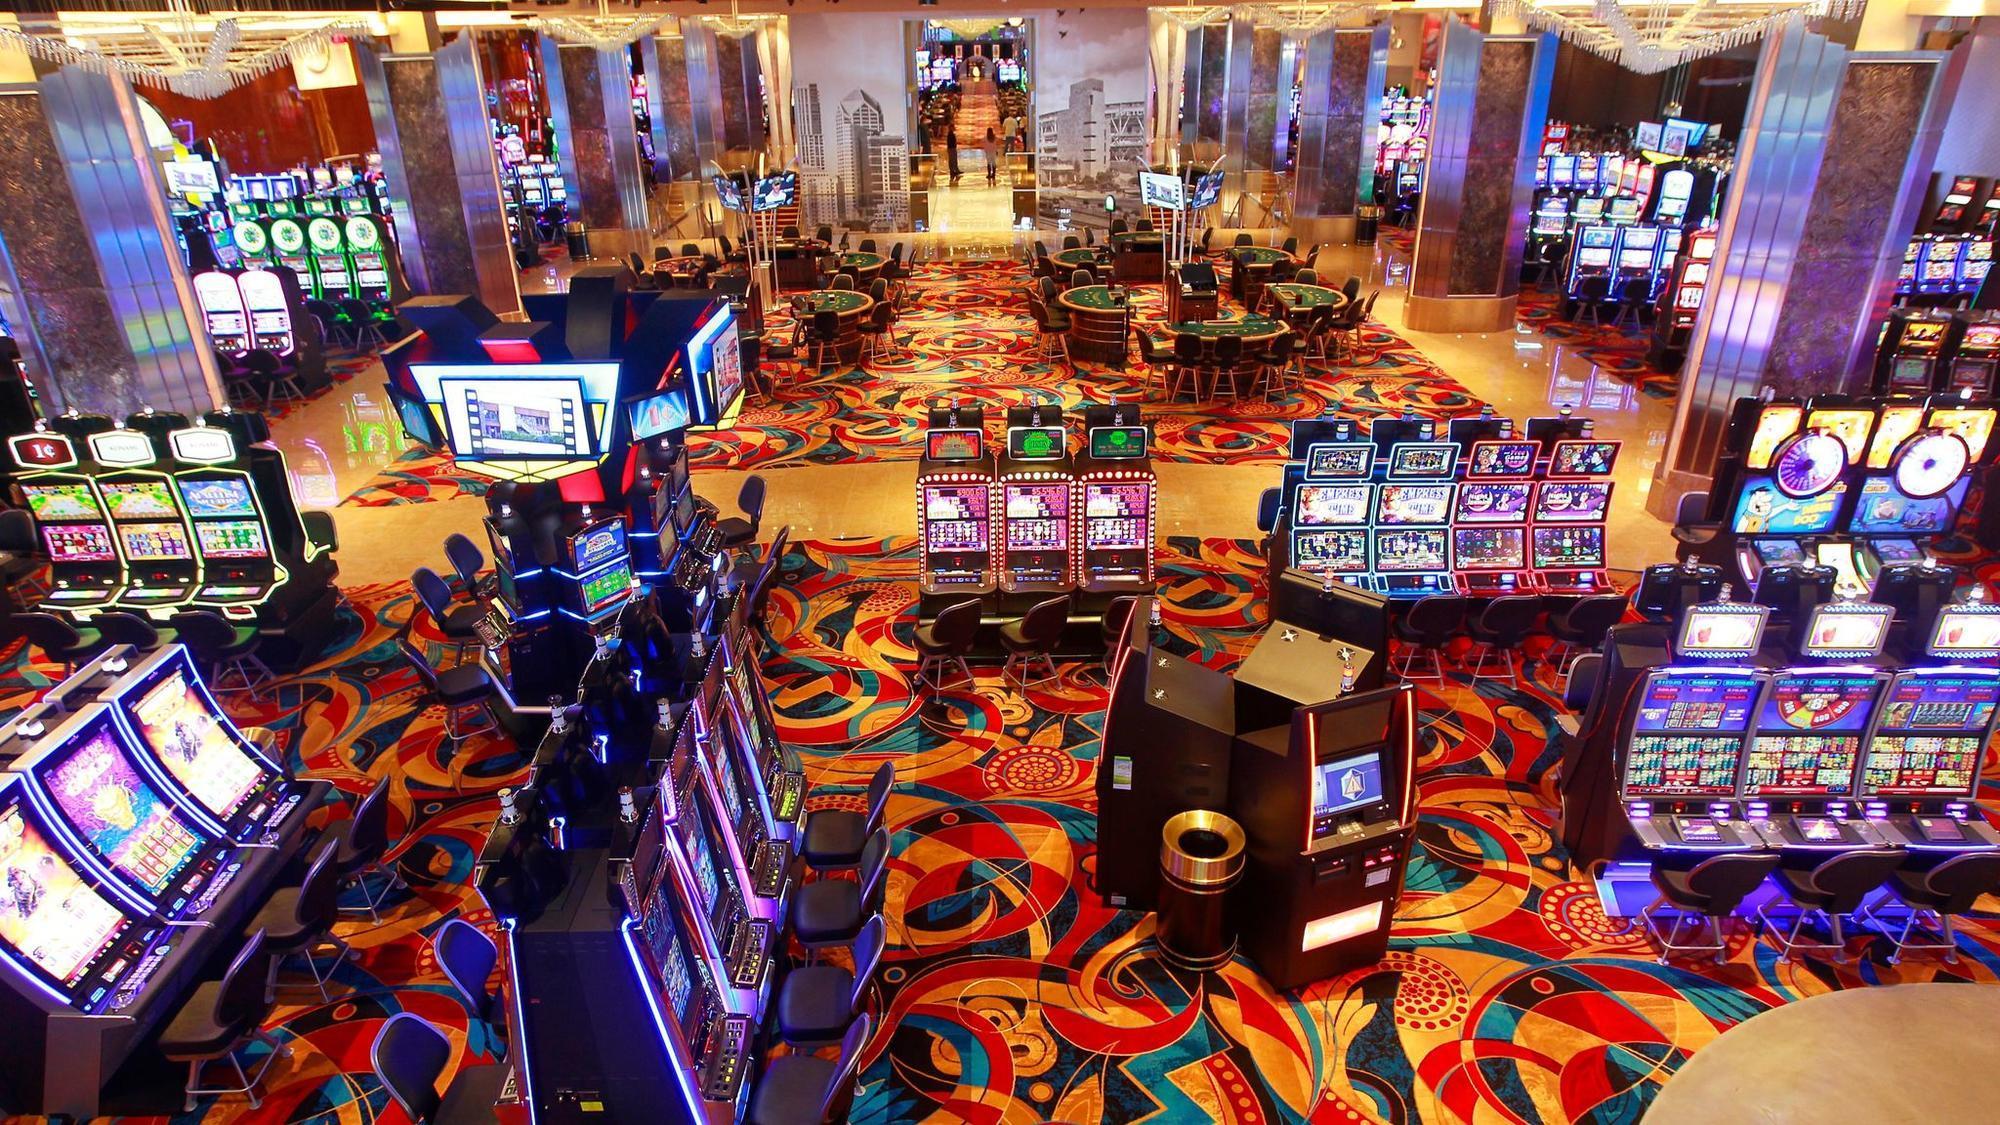 The Gaming Club Casino